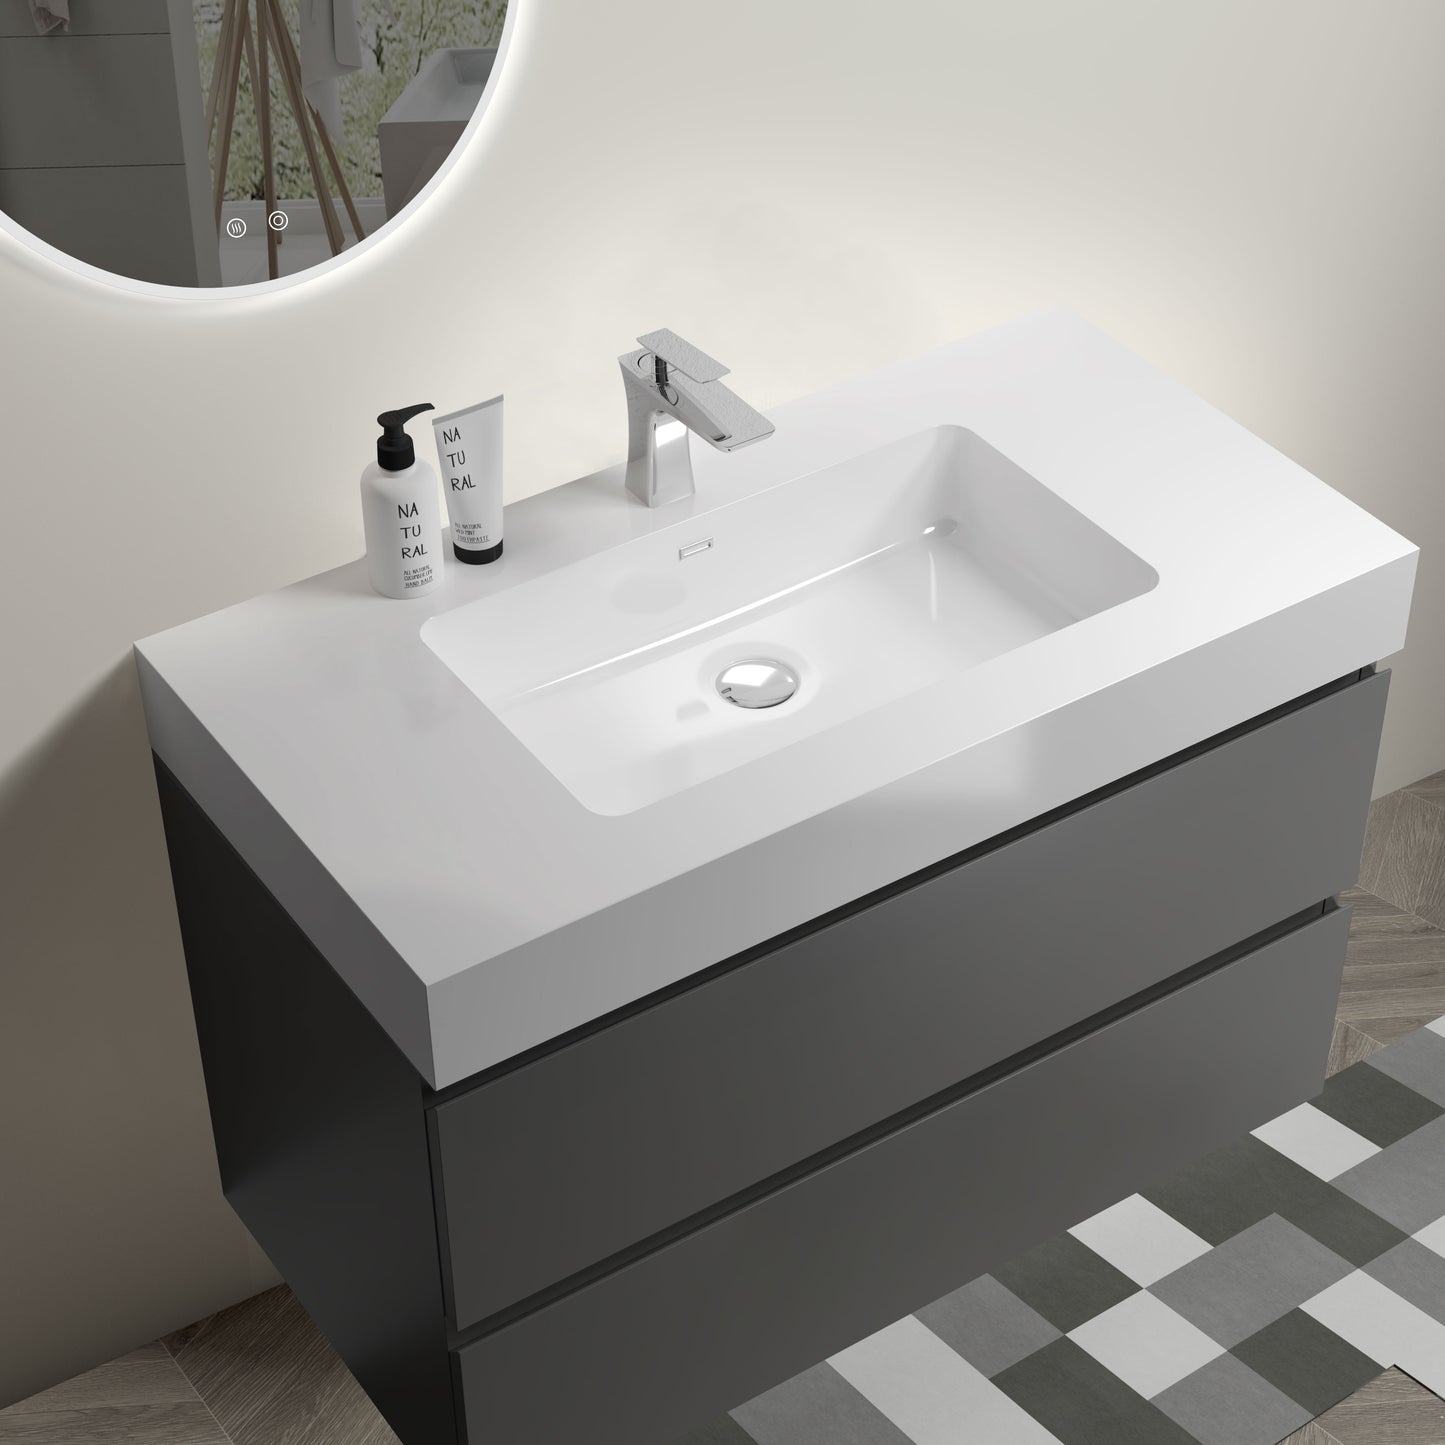 Alice|Gray Bathroom Vanity with Sink